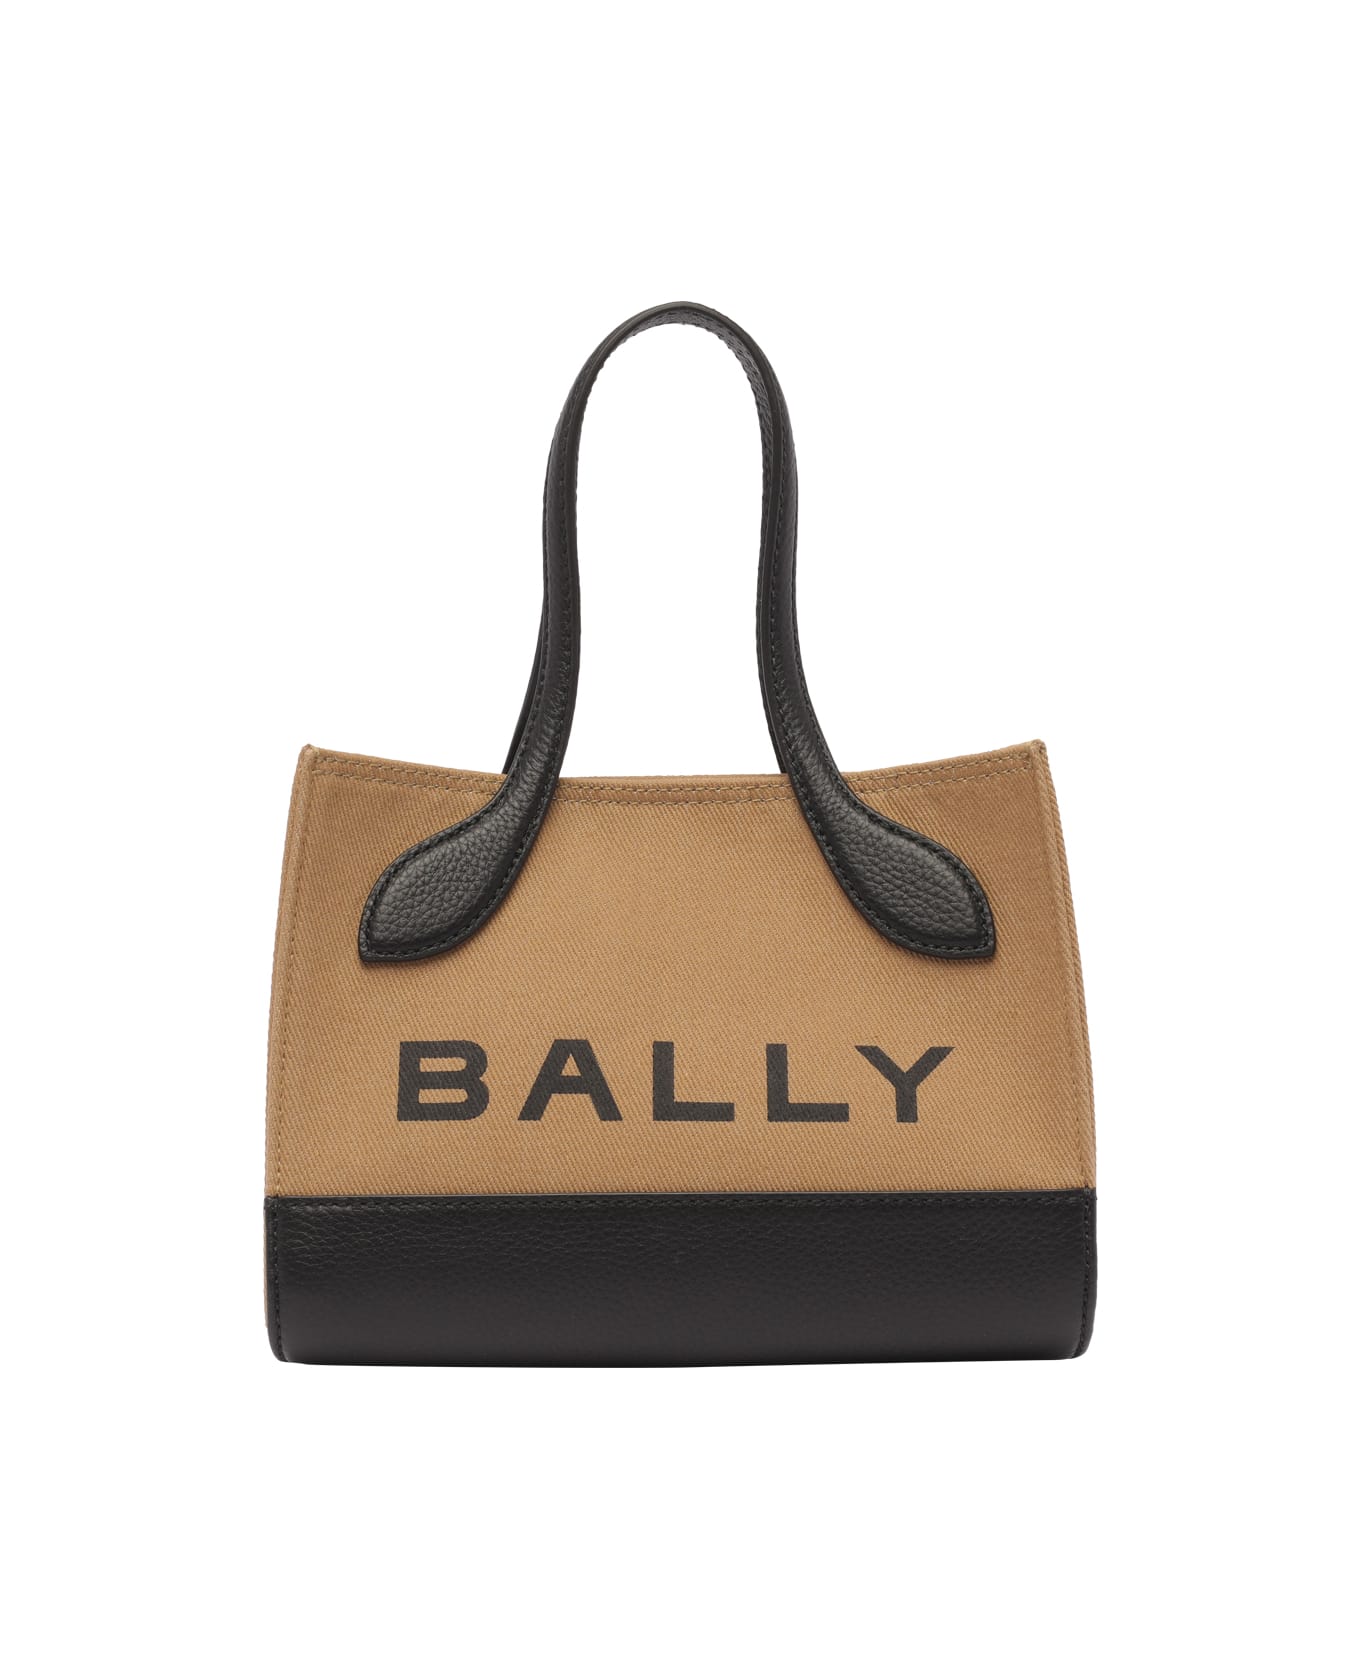 Bally Logo Tote Bag - Sand/black+oro トートバッグ